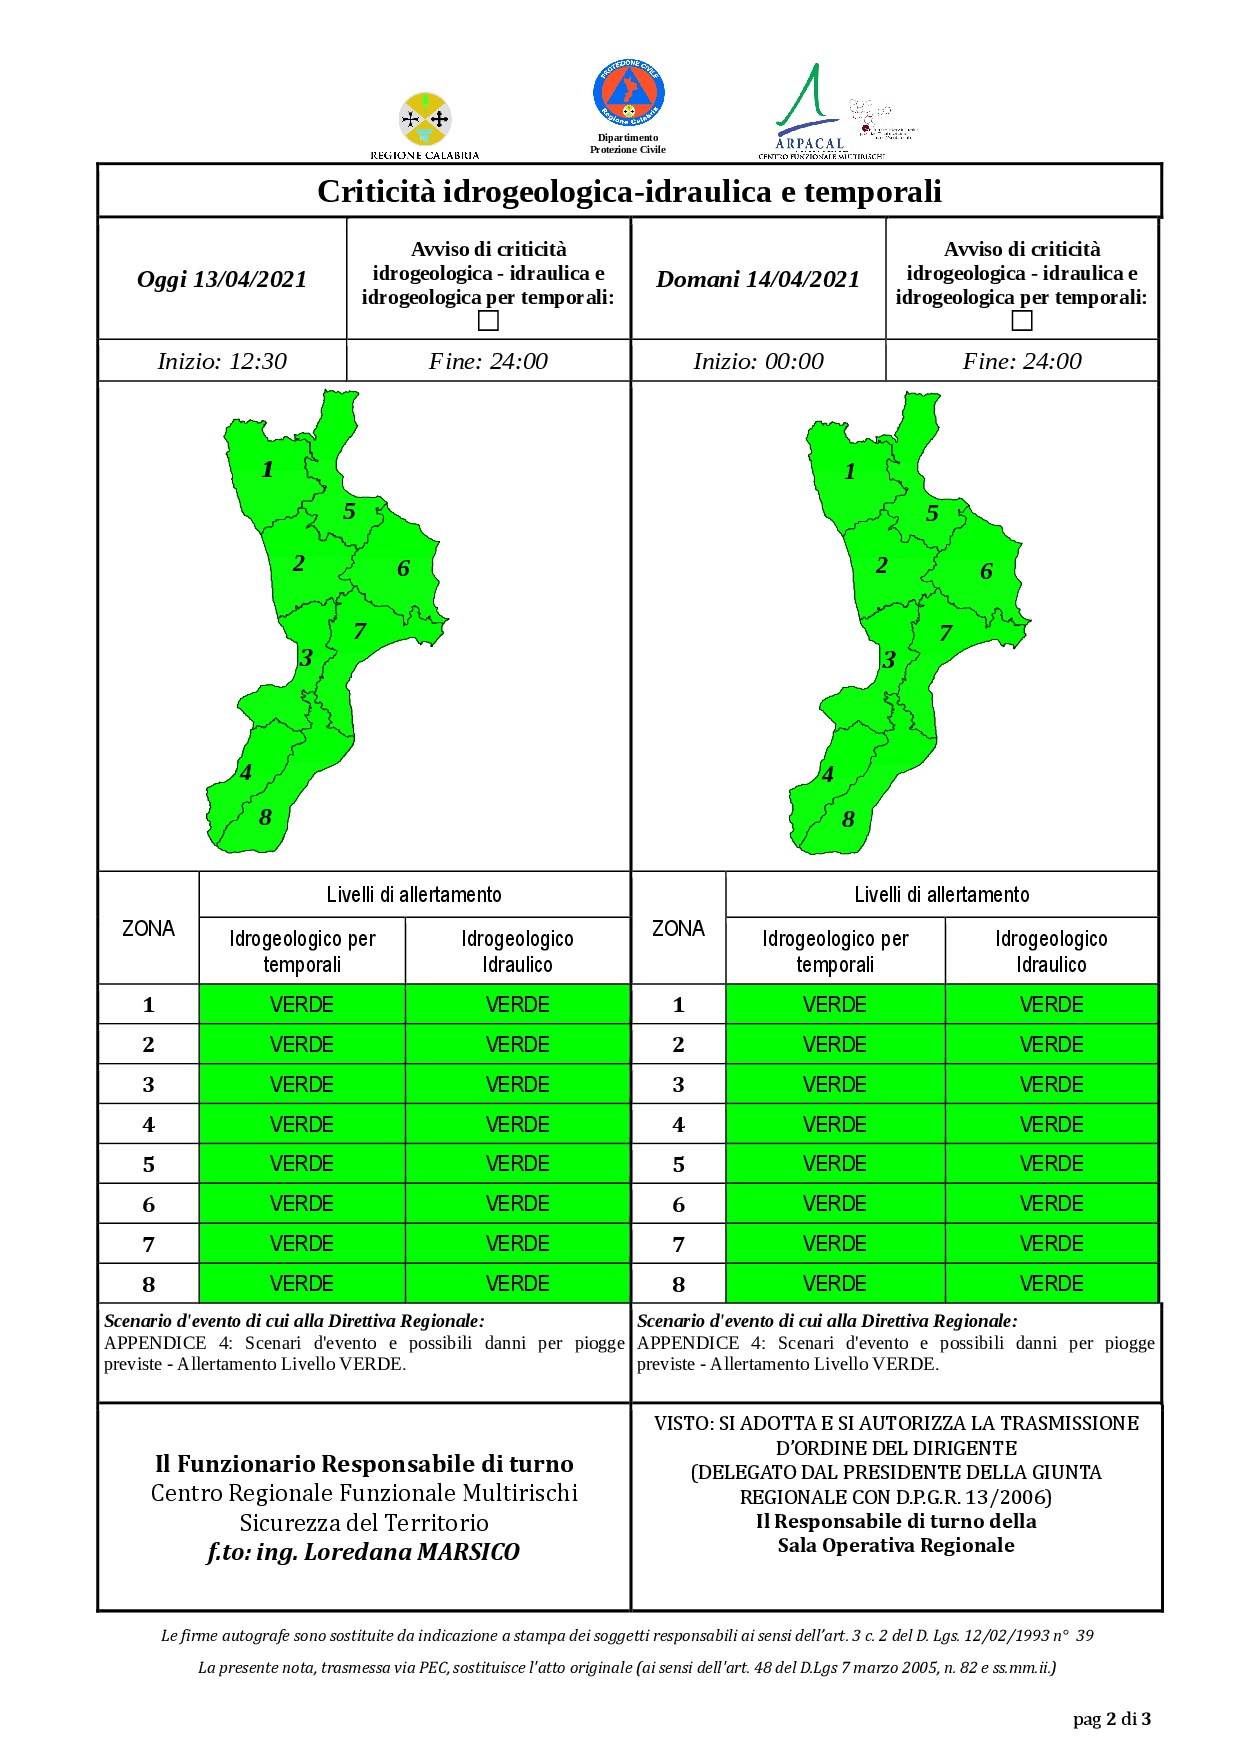 Criticità idrogeologica-idraulica e temporali in Calabria 13-04-2021